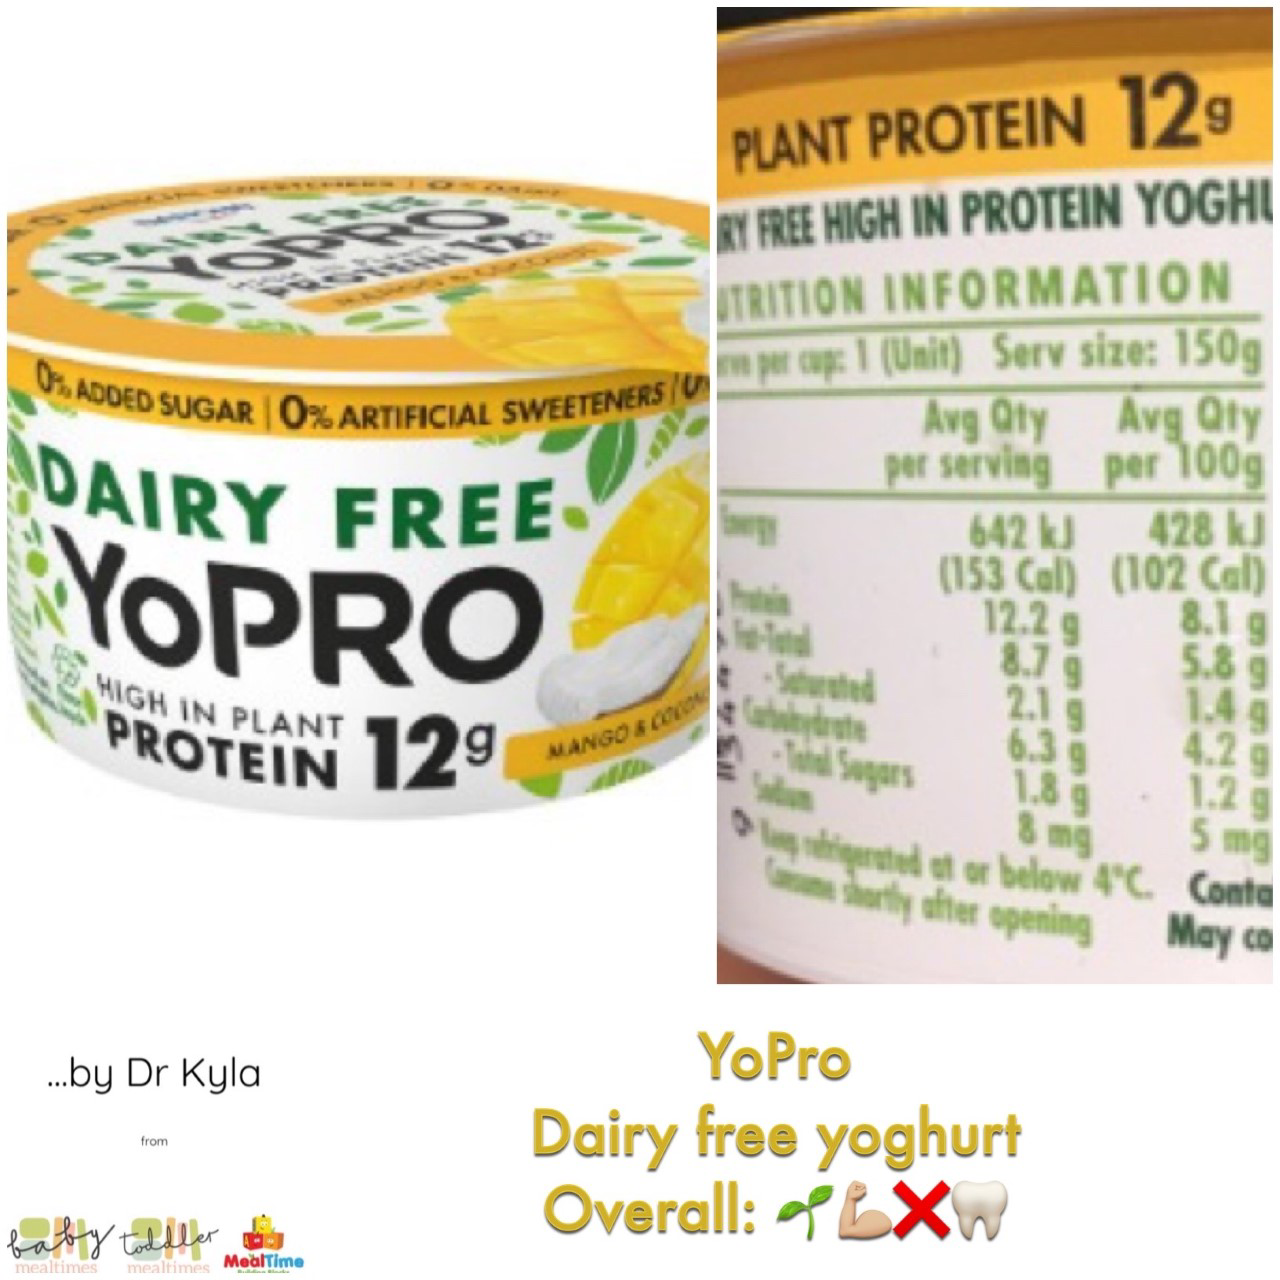 yopro-dairy-free-yoghurt